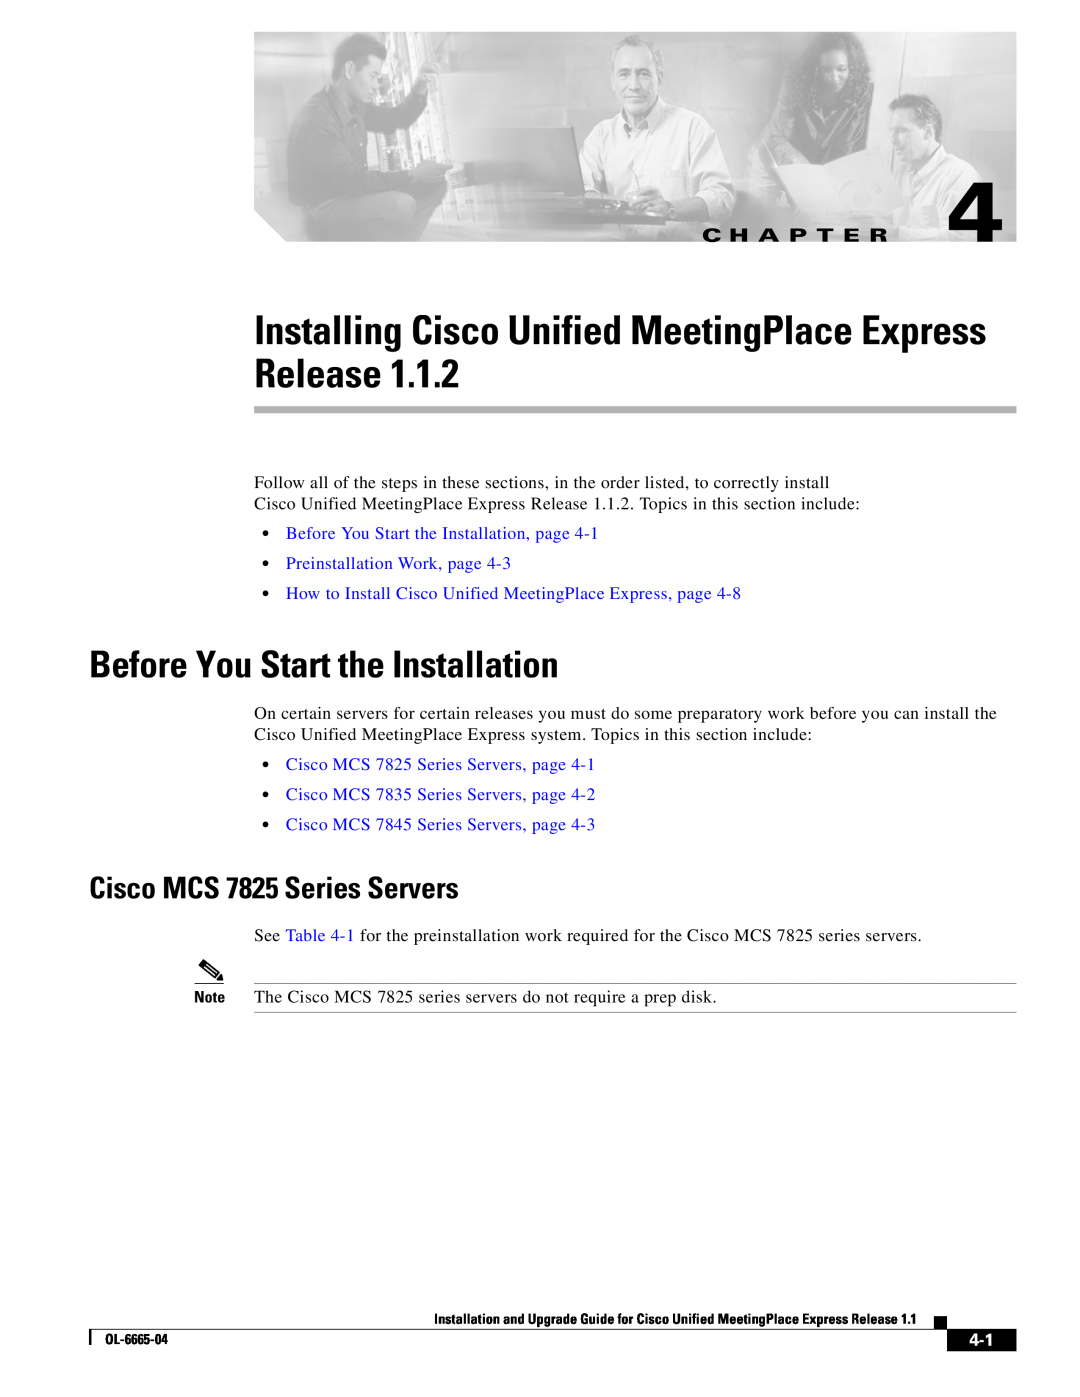 Cisco Systems MCS 7835, MCS 7845 manual Before You Start the Installation, Cisco MCS 7825 Series Servers, C H A P T E R 